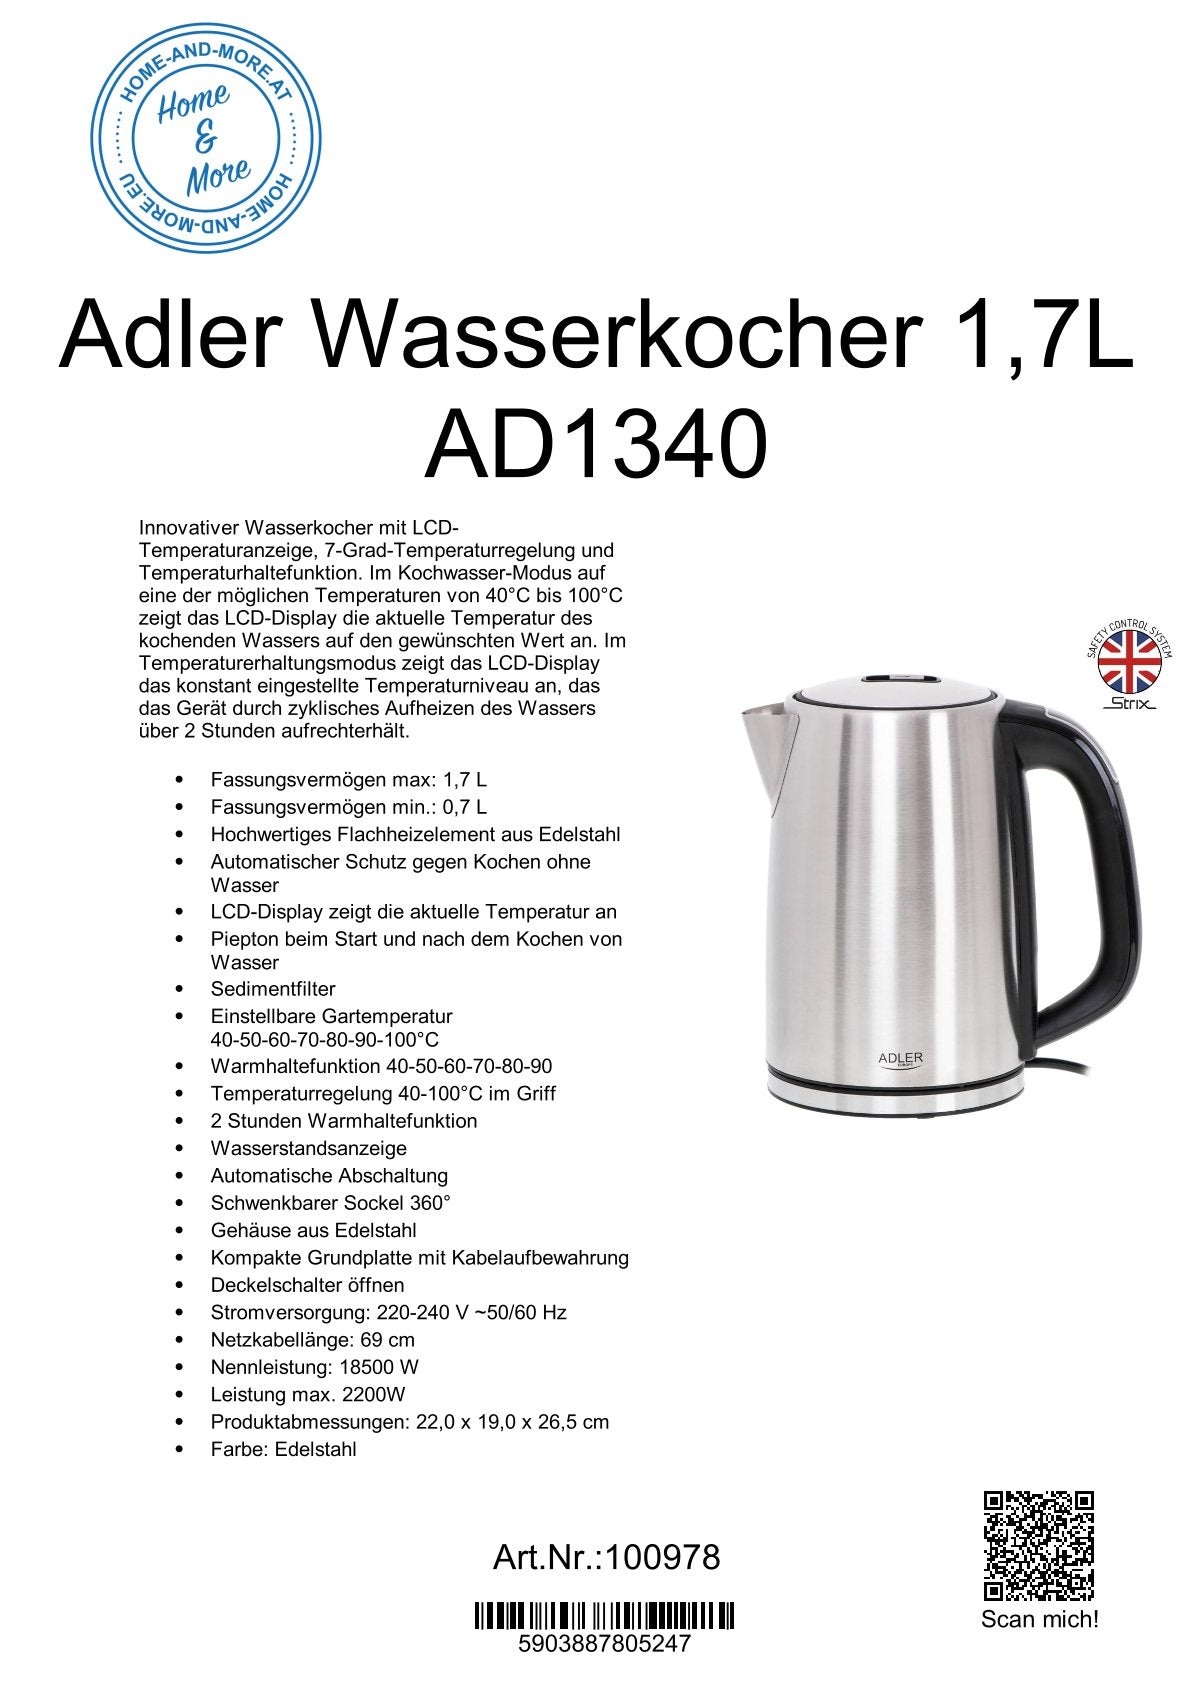 Adler Wasserkocher 1,7L AD1340